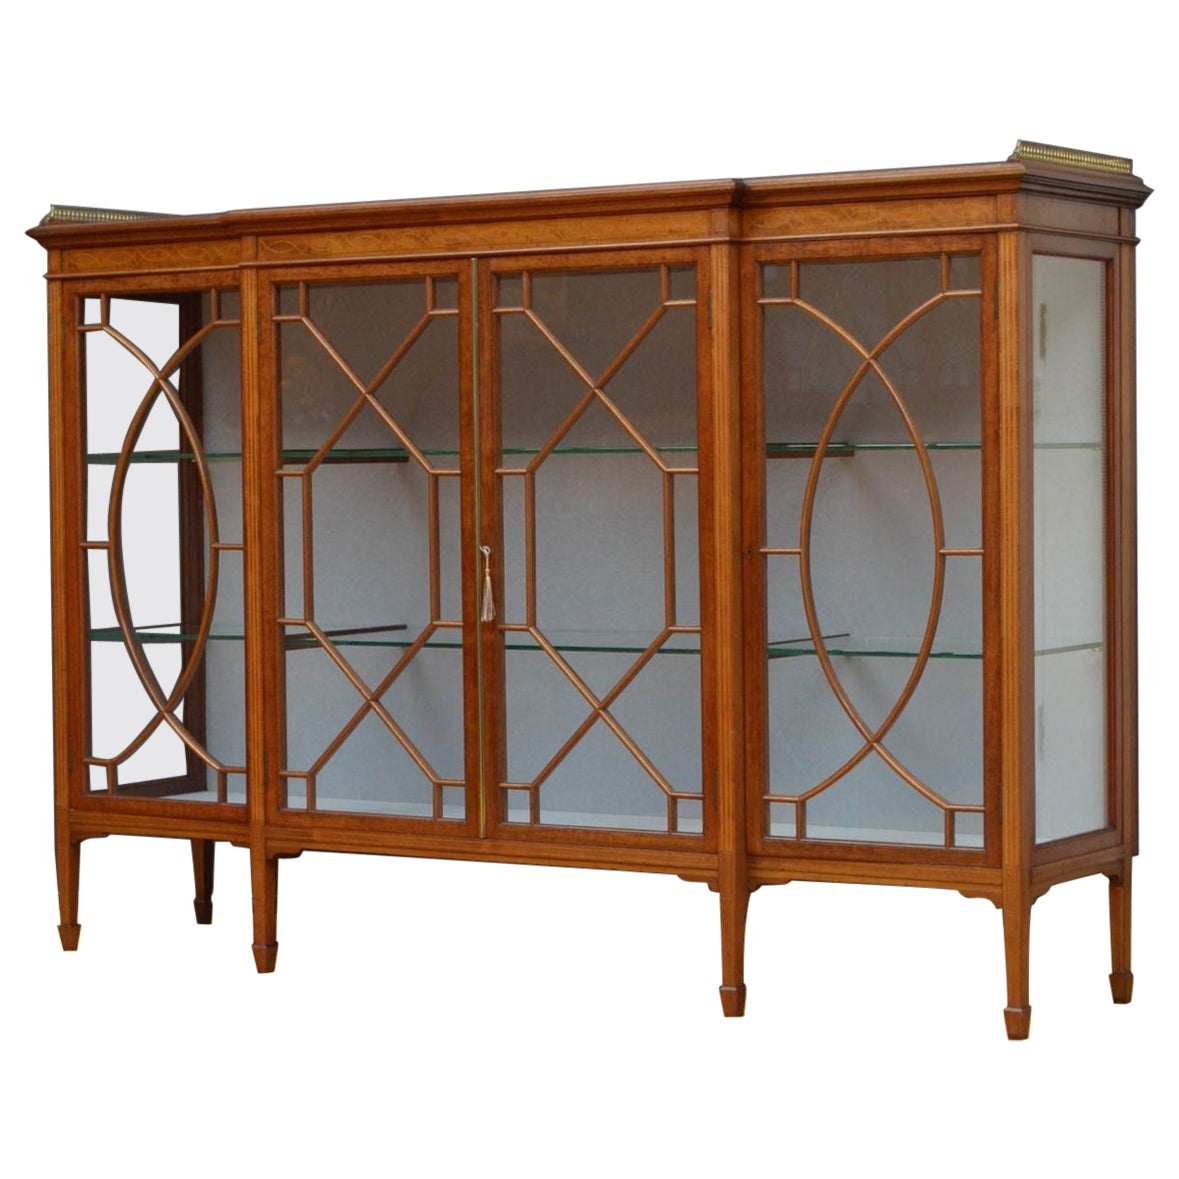 Superb Edwardian Mahogany and Inlaid Display Cabinet